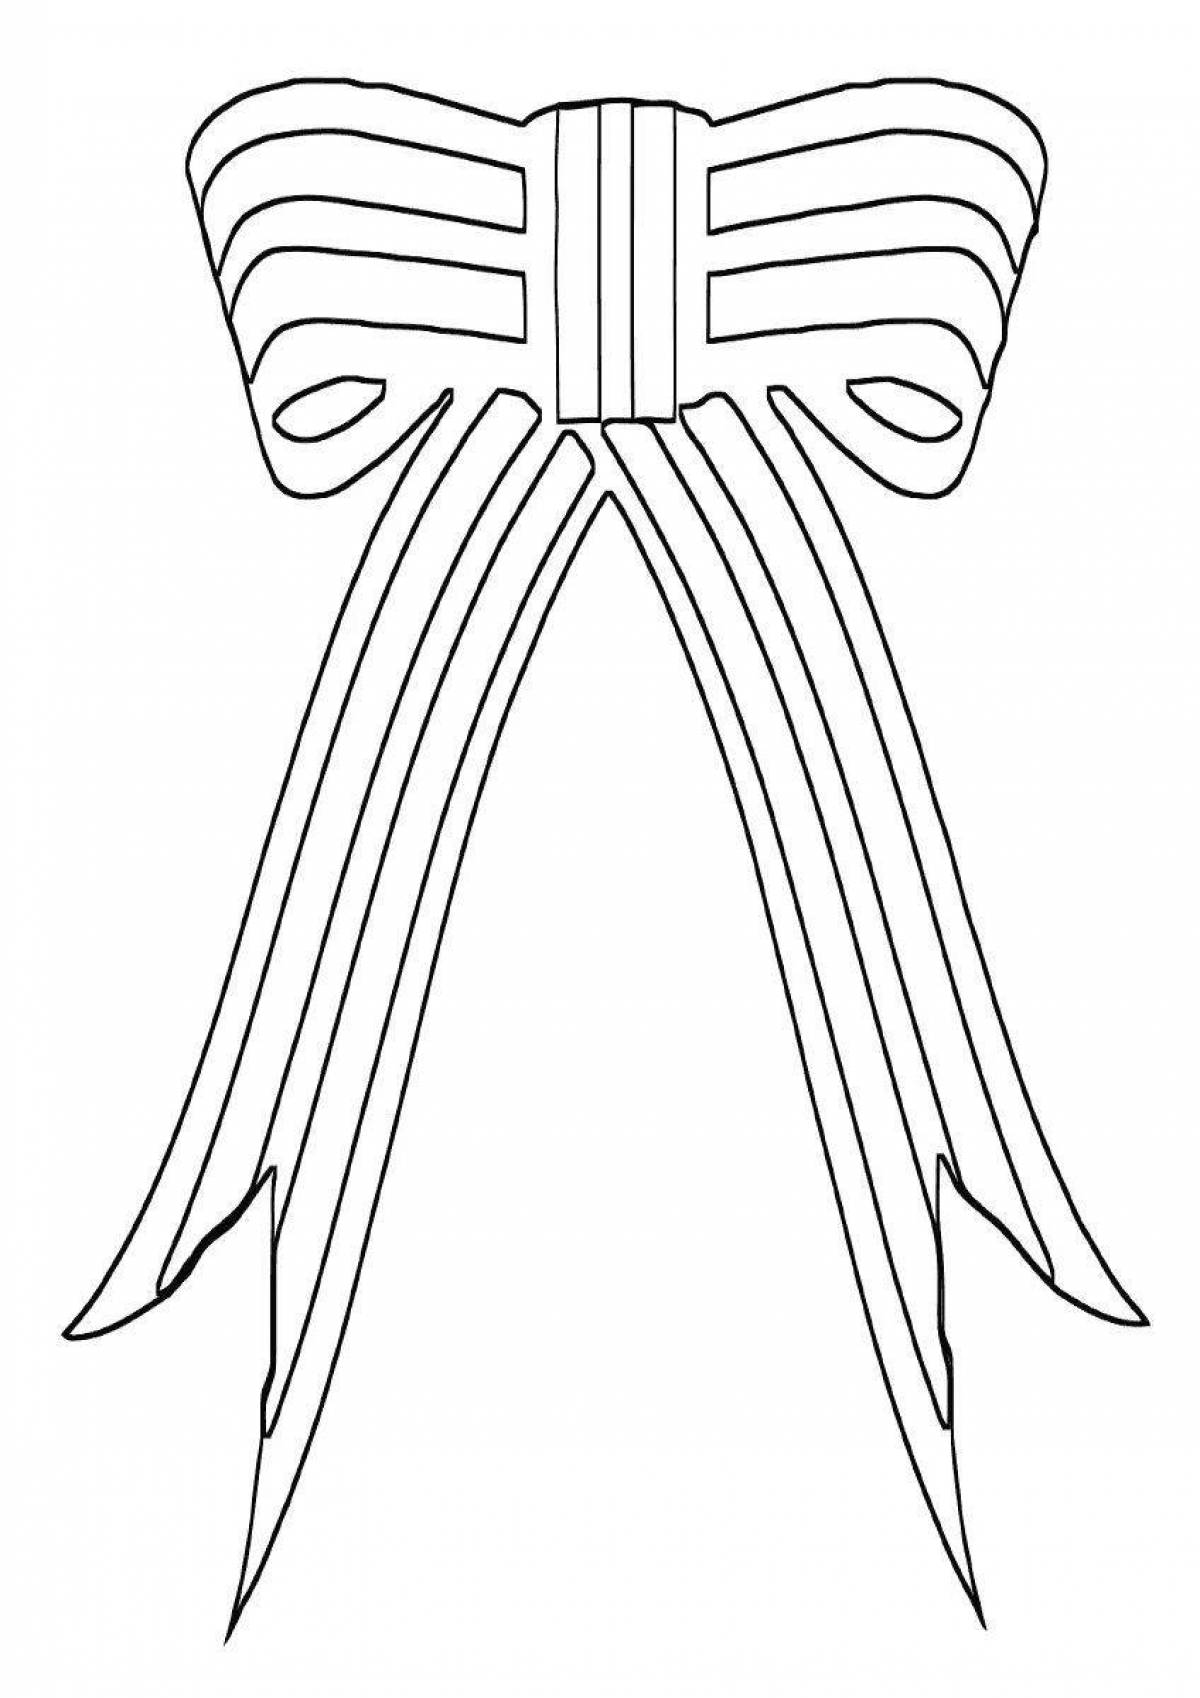 Impressive drawing of St. George ribbon